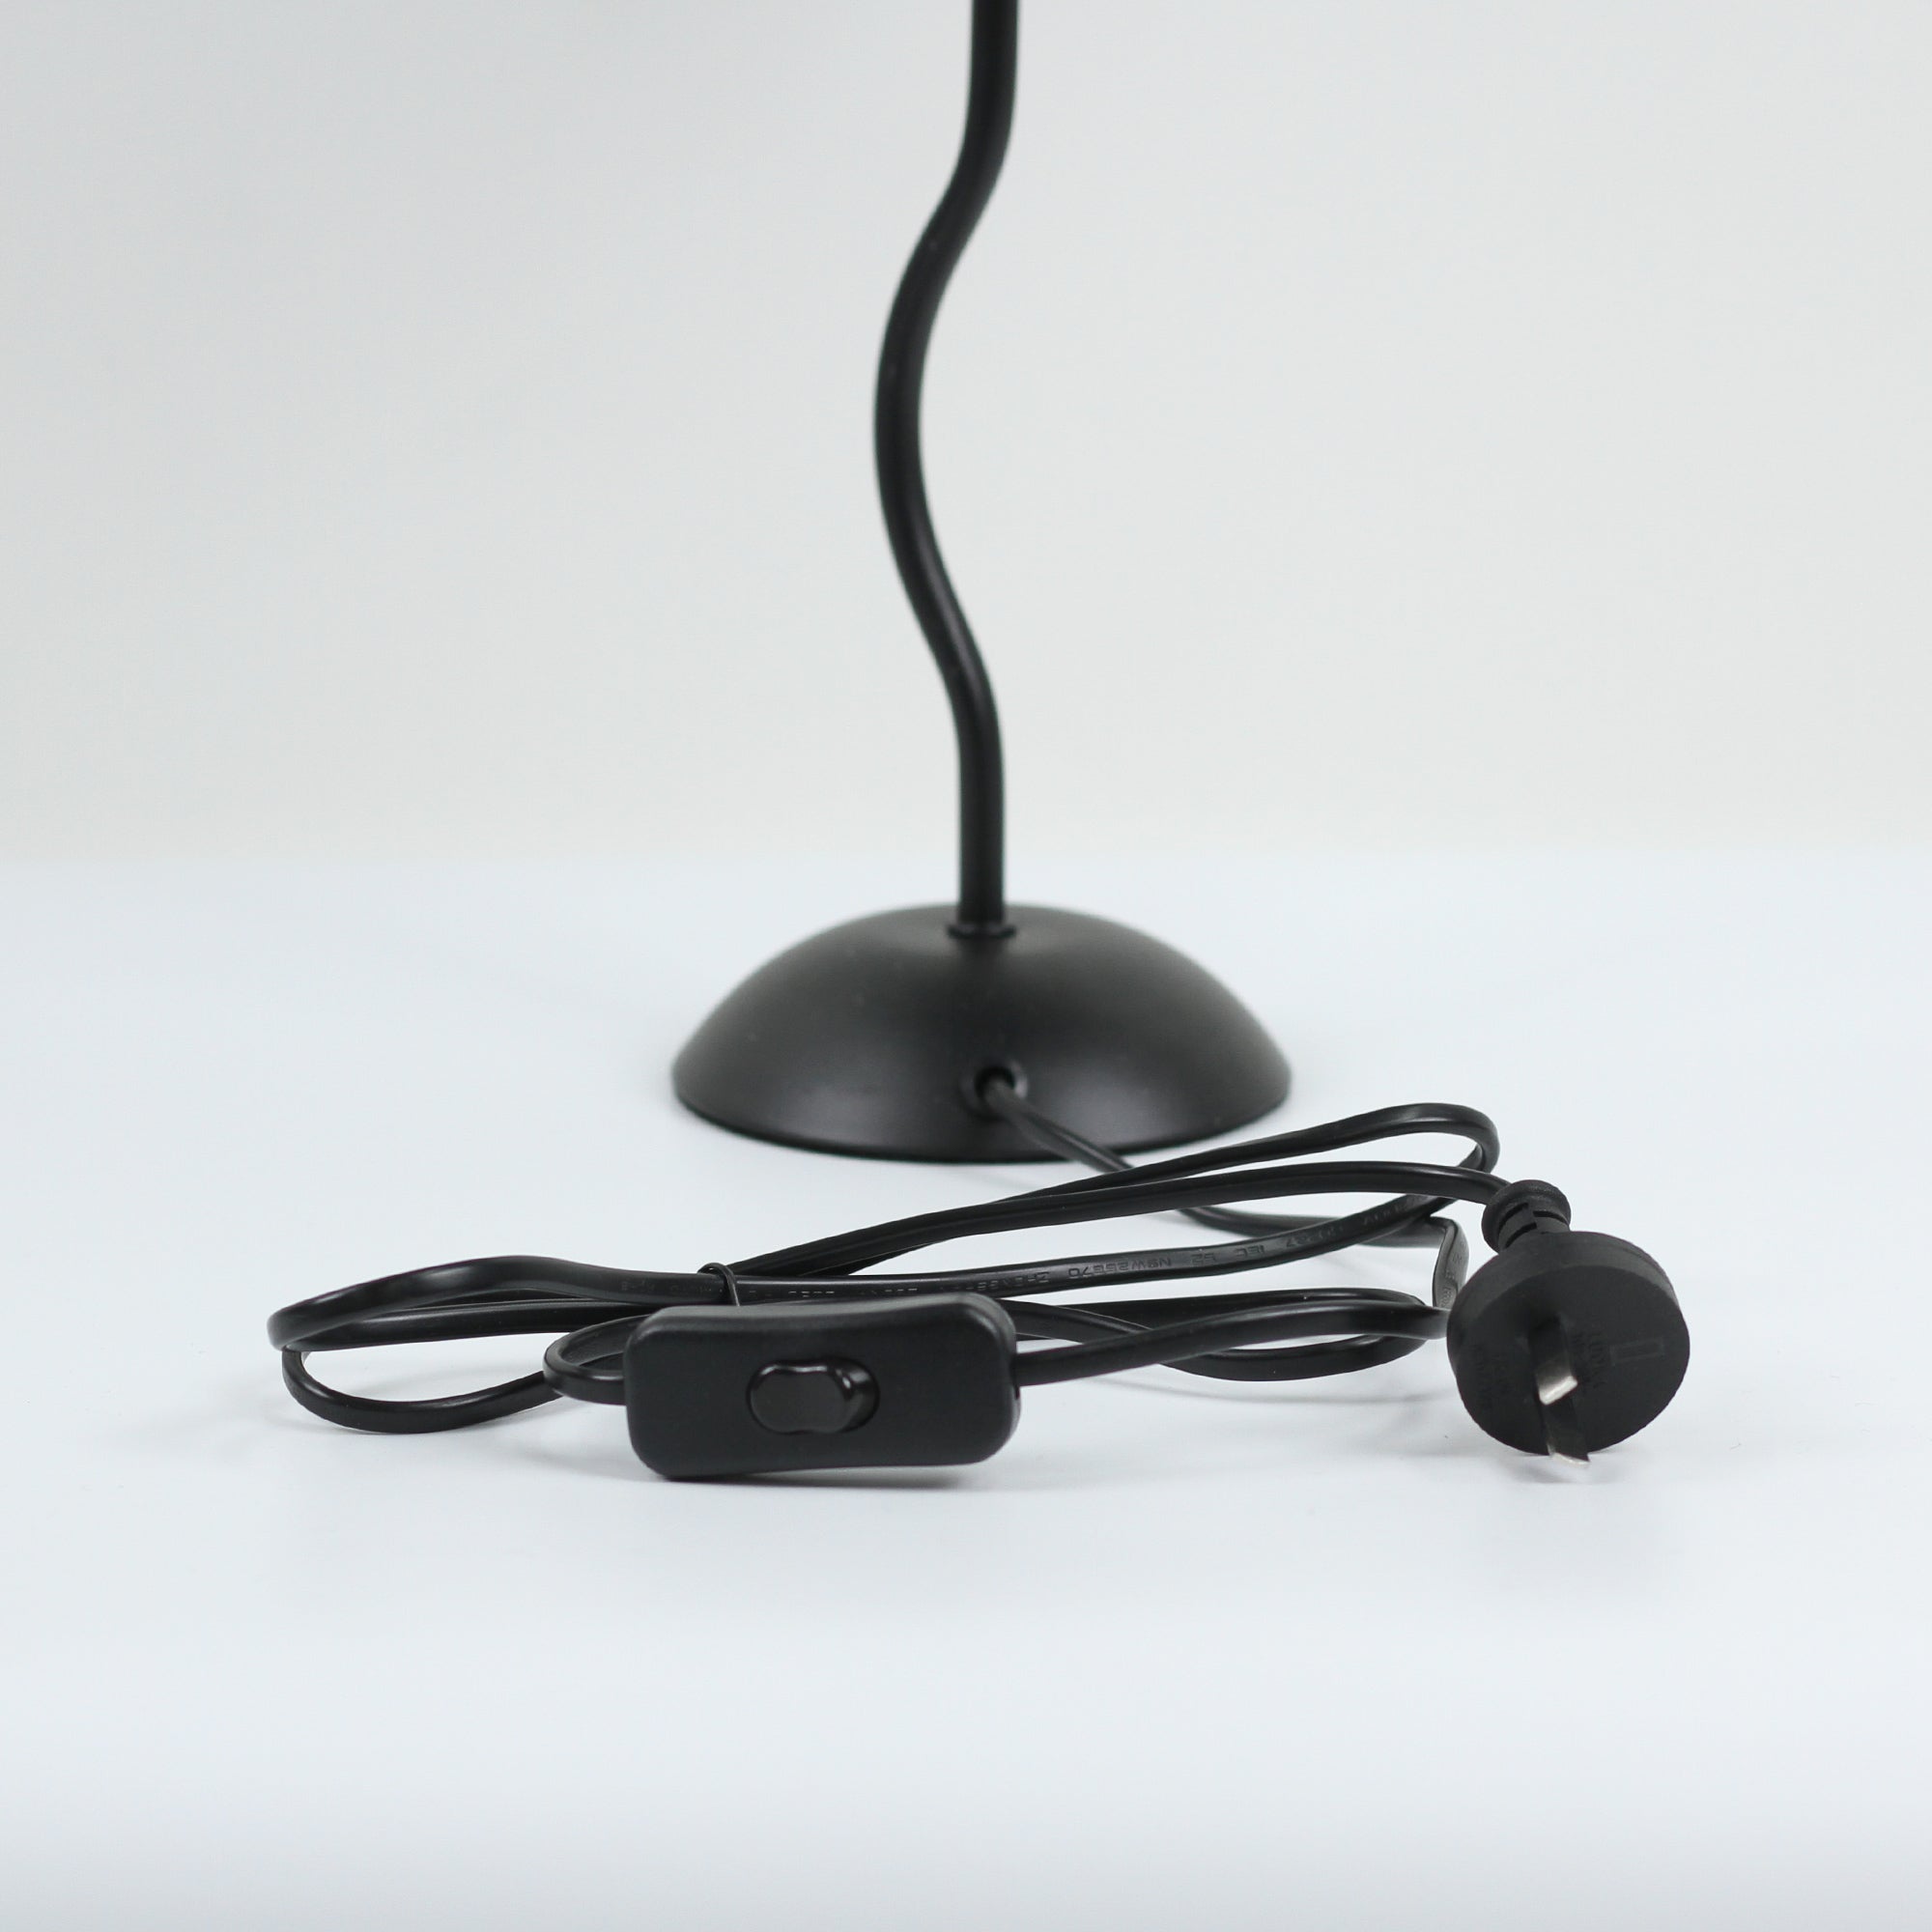 Piairie Table Lamp - Black